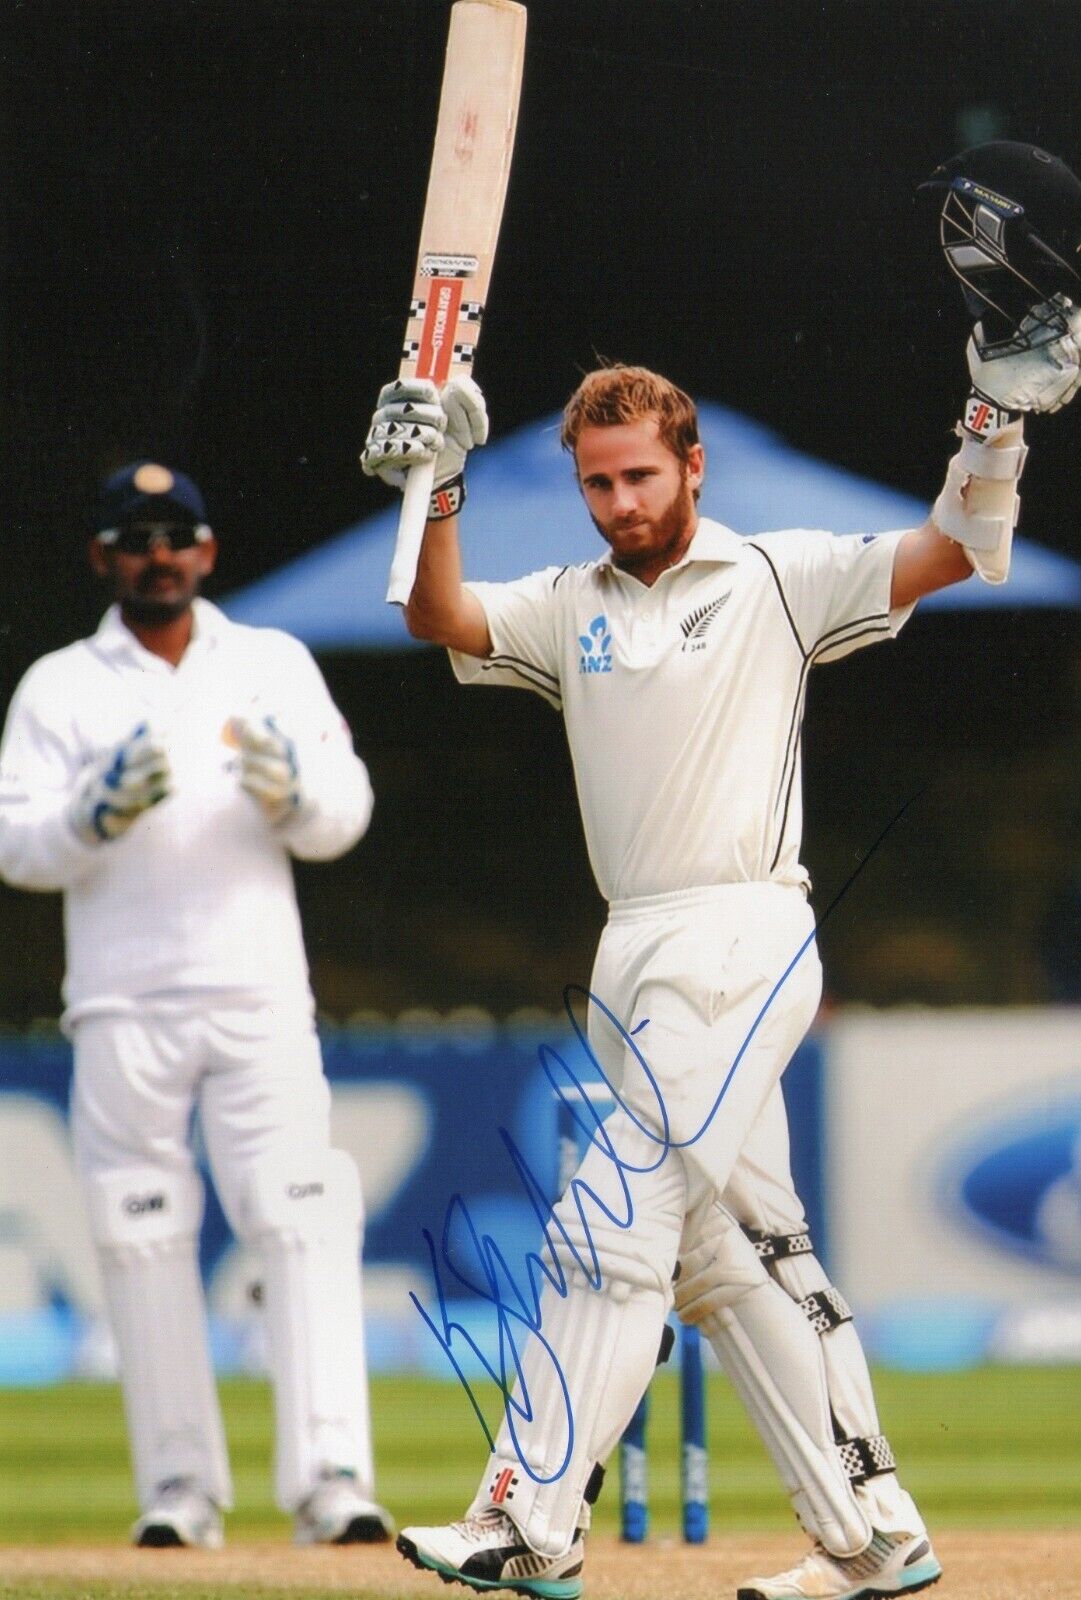 5x7 Original Autographed Photo of New Zealand Cricketer Kane Williamson